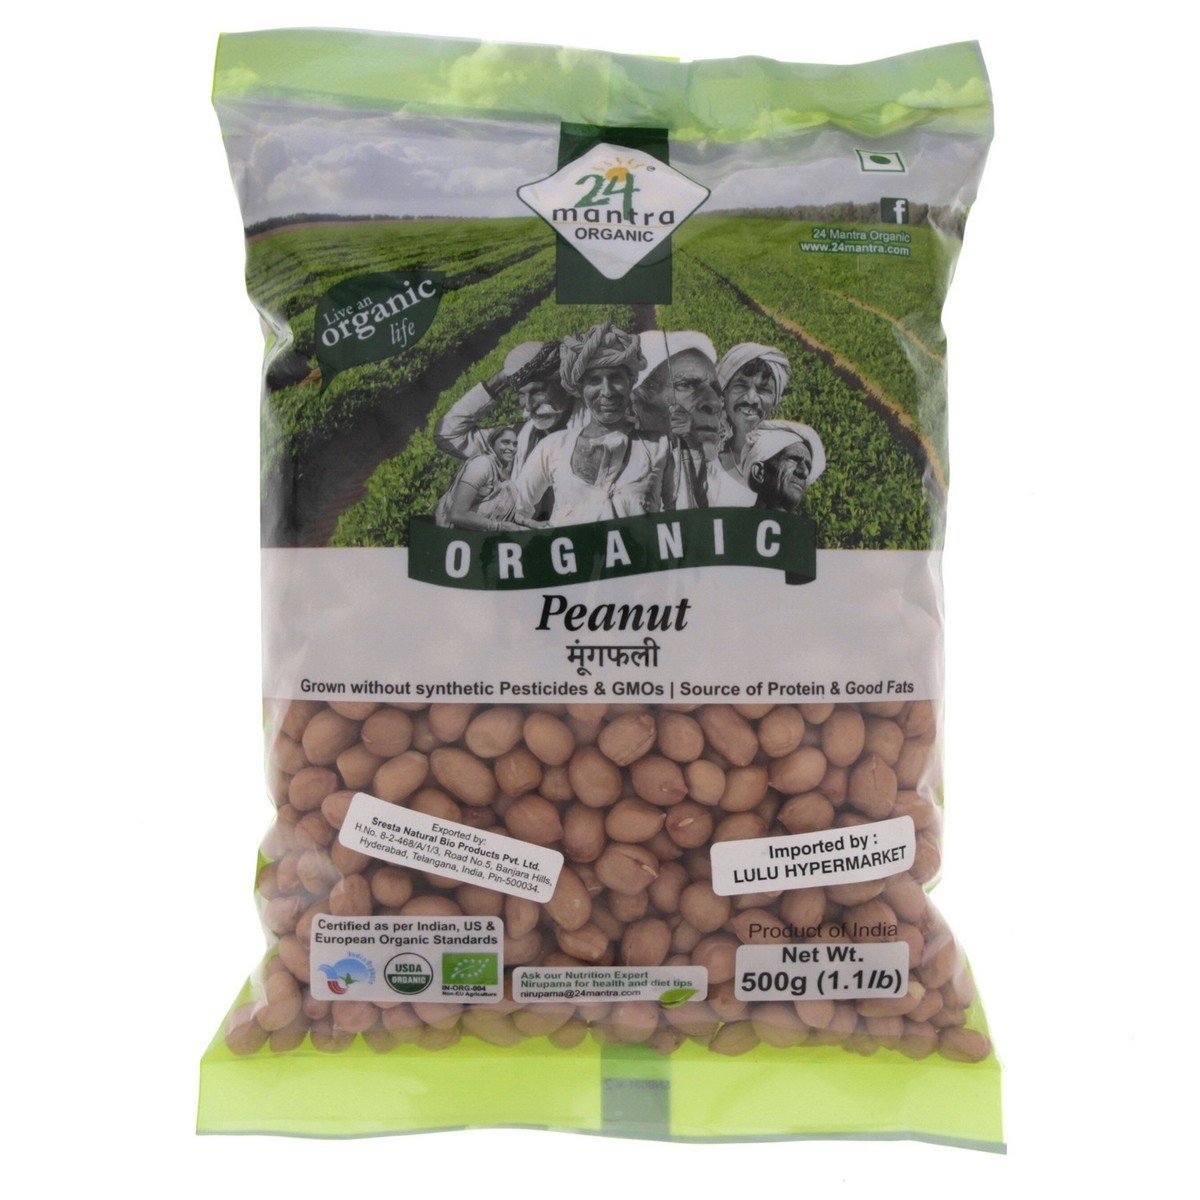 24 Mantra Organic Peanut 500g